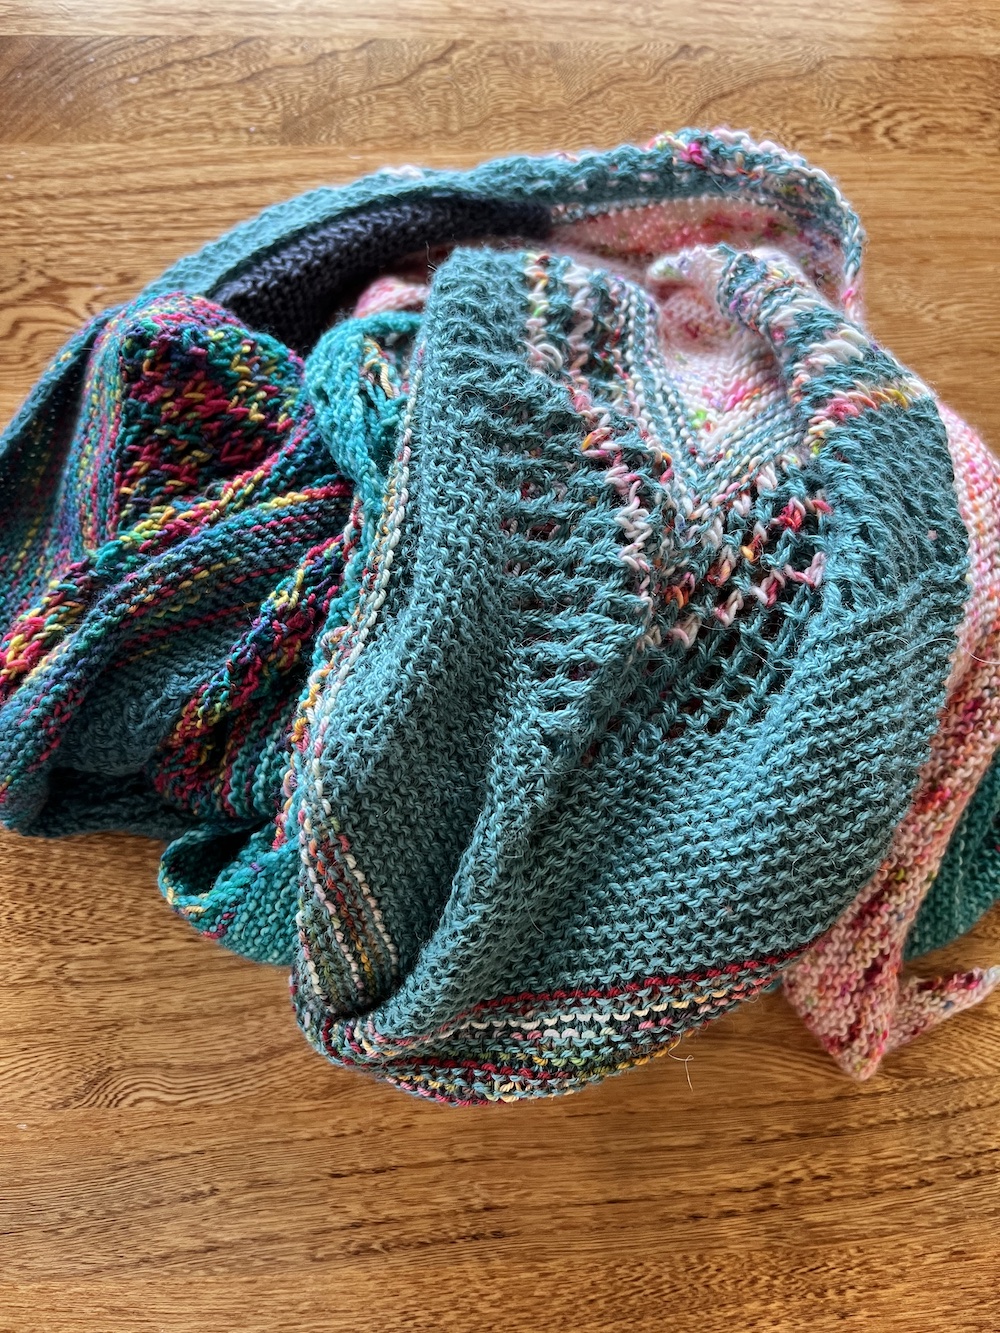 Knitting Goals: Your Knitting Bucket List